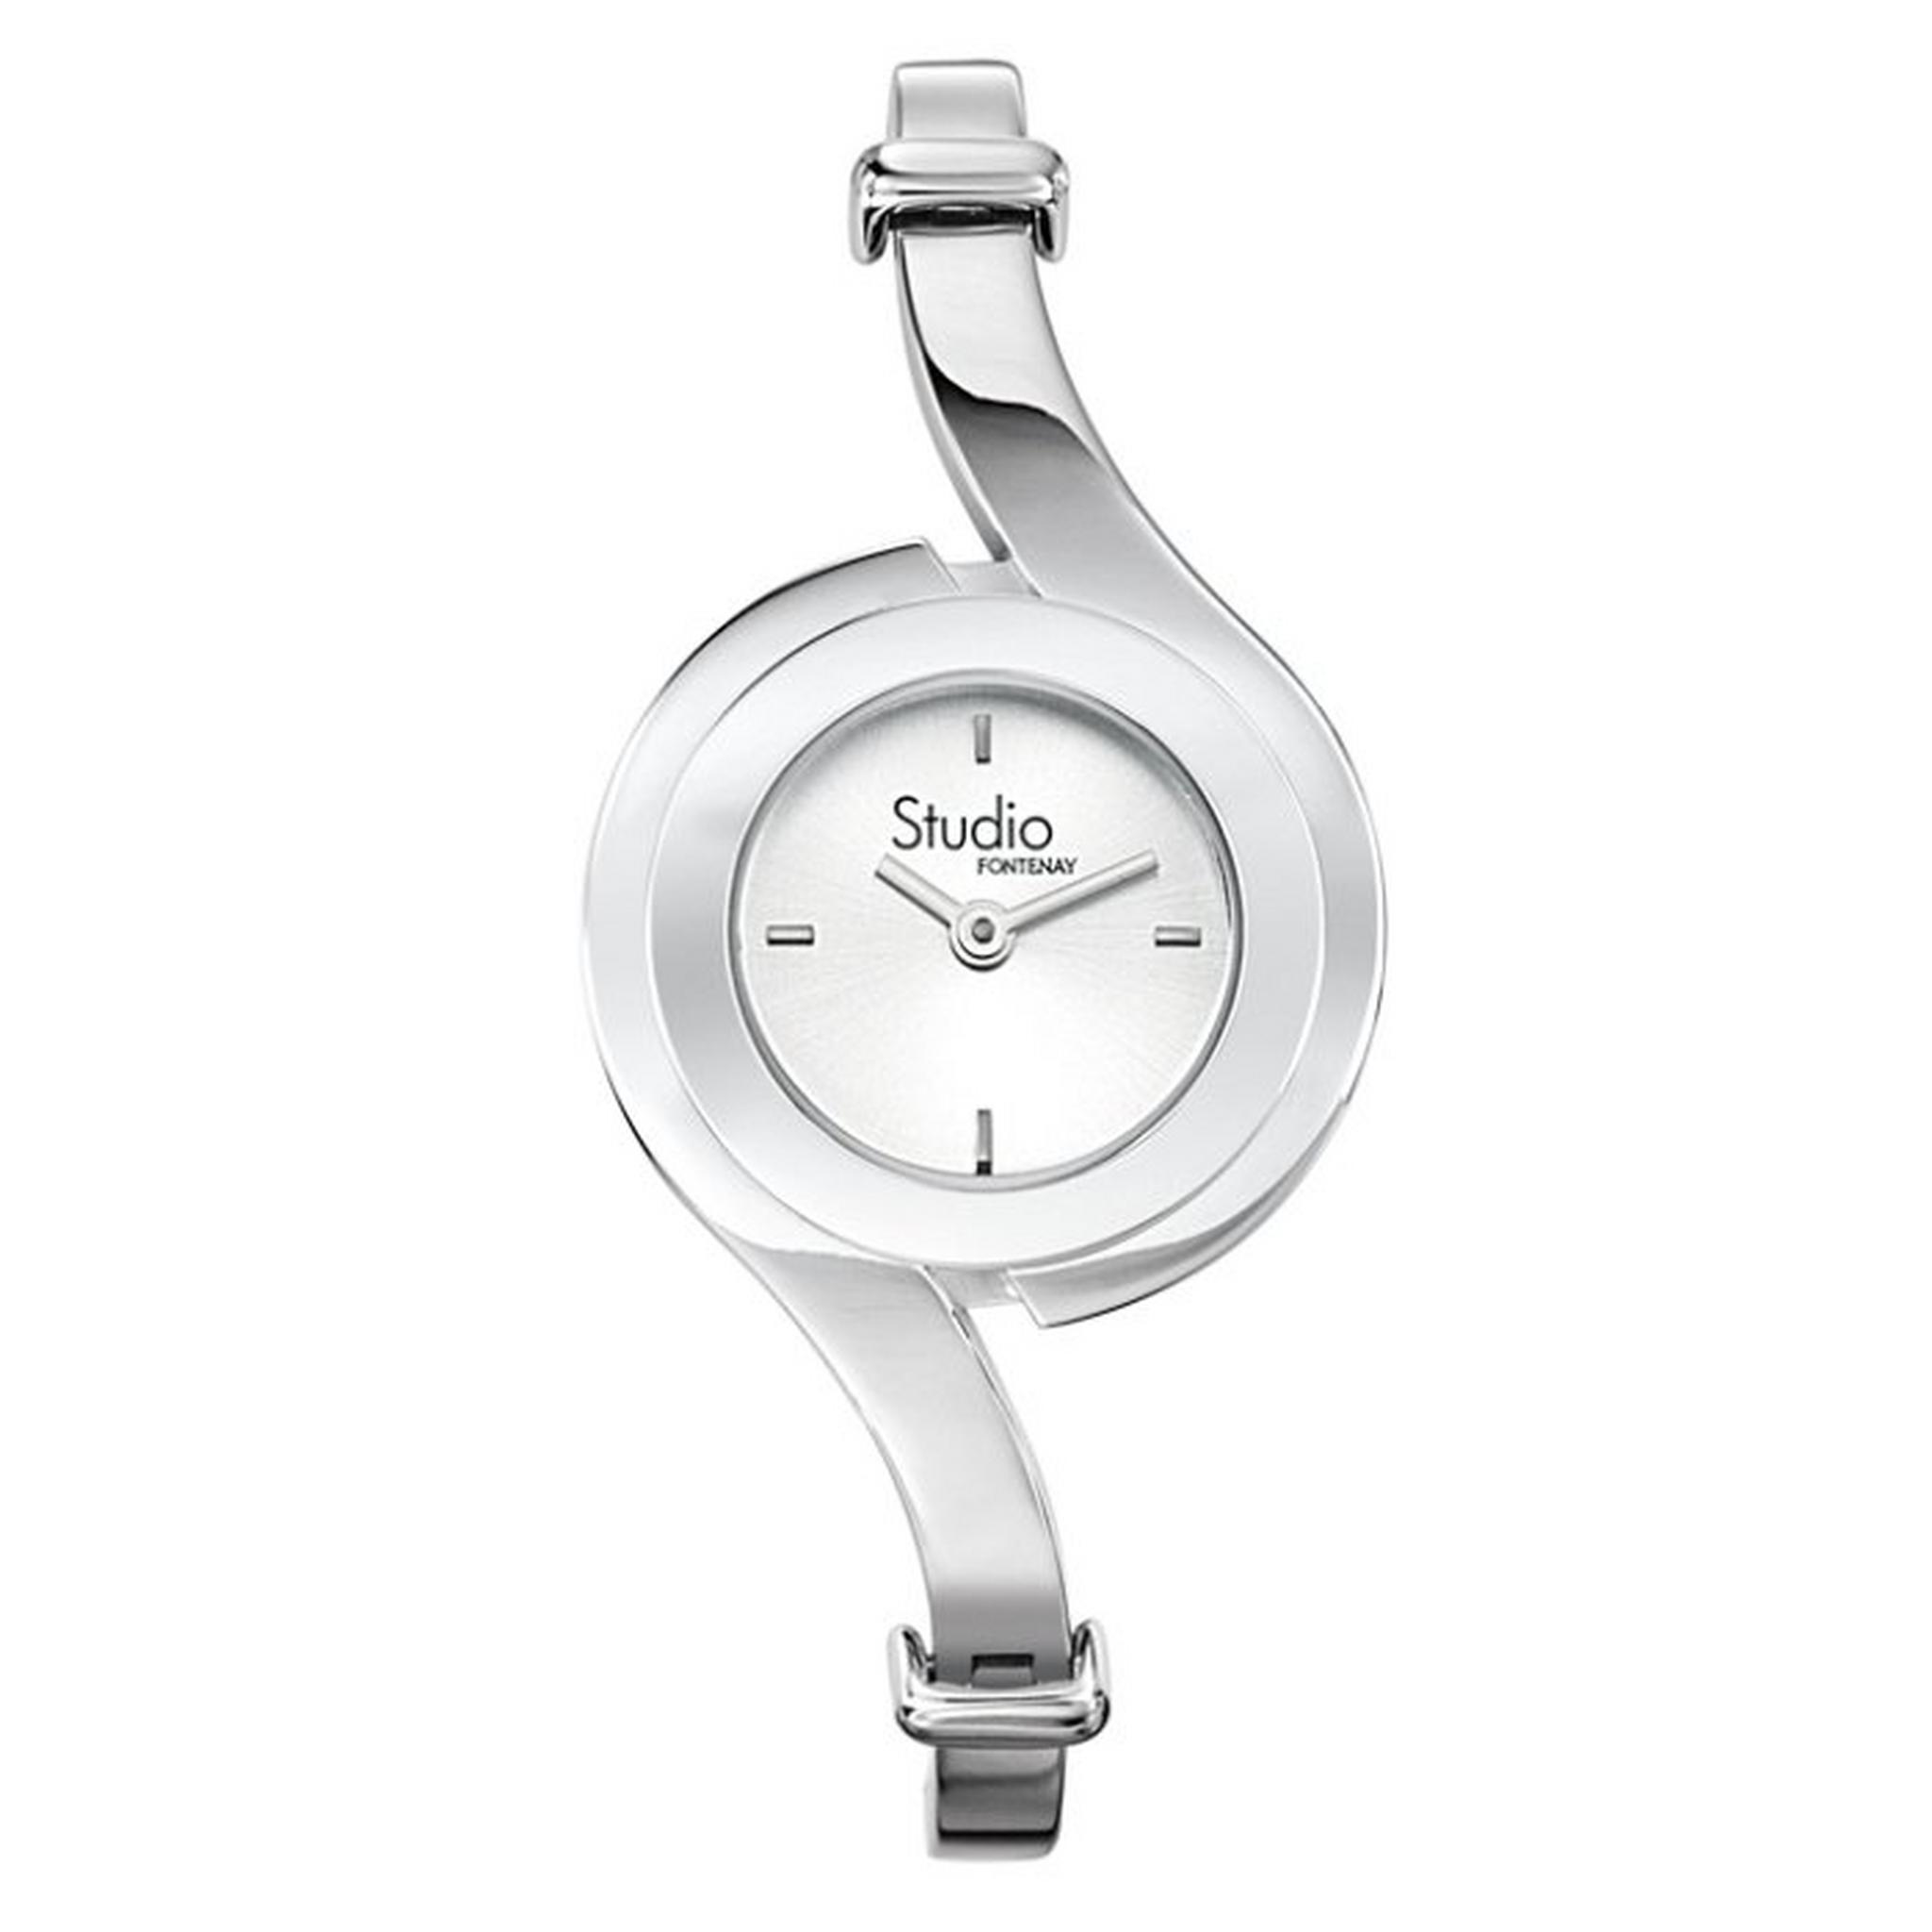 ساعة فونتيناي بحجم 27 ملم بعرض تناظري و حزام معدني للنساء  - AUA1307AR